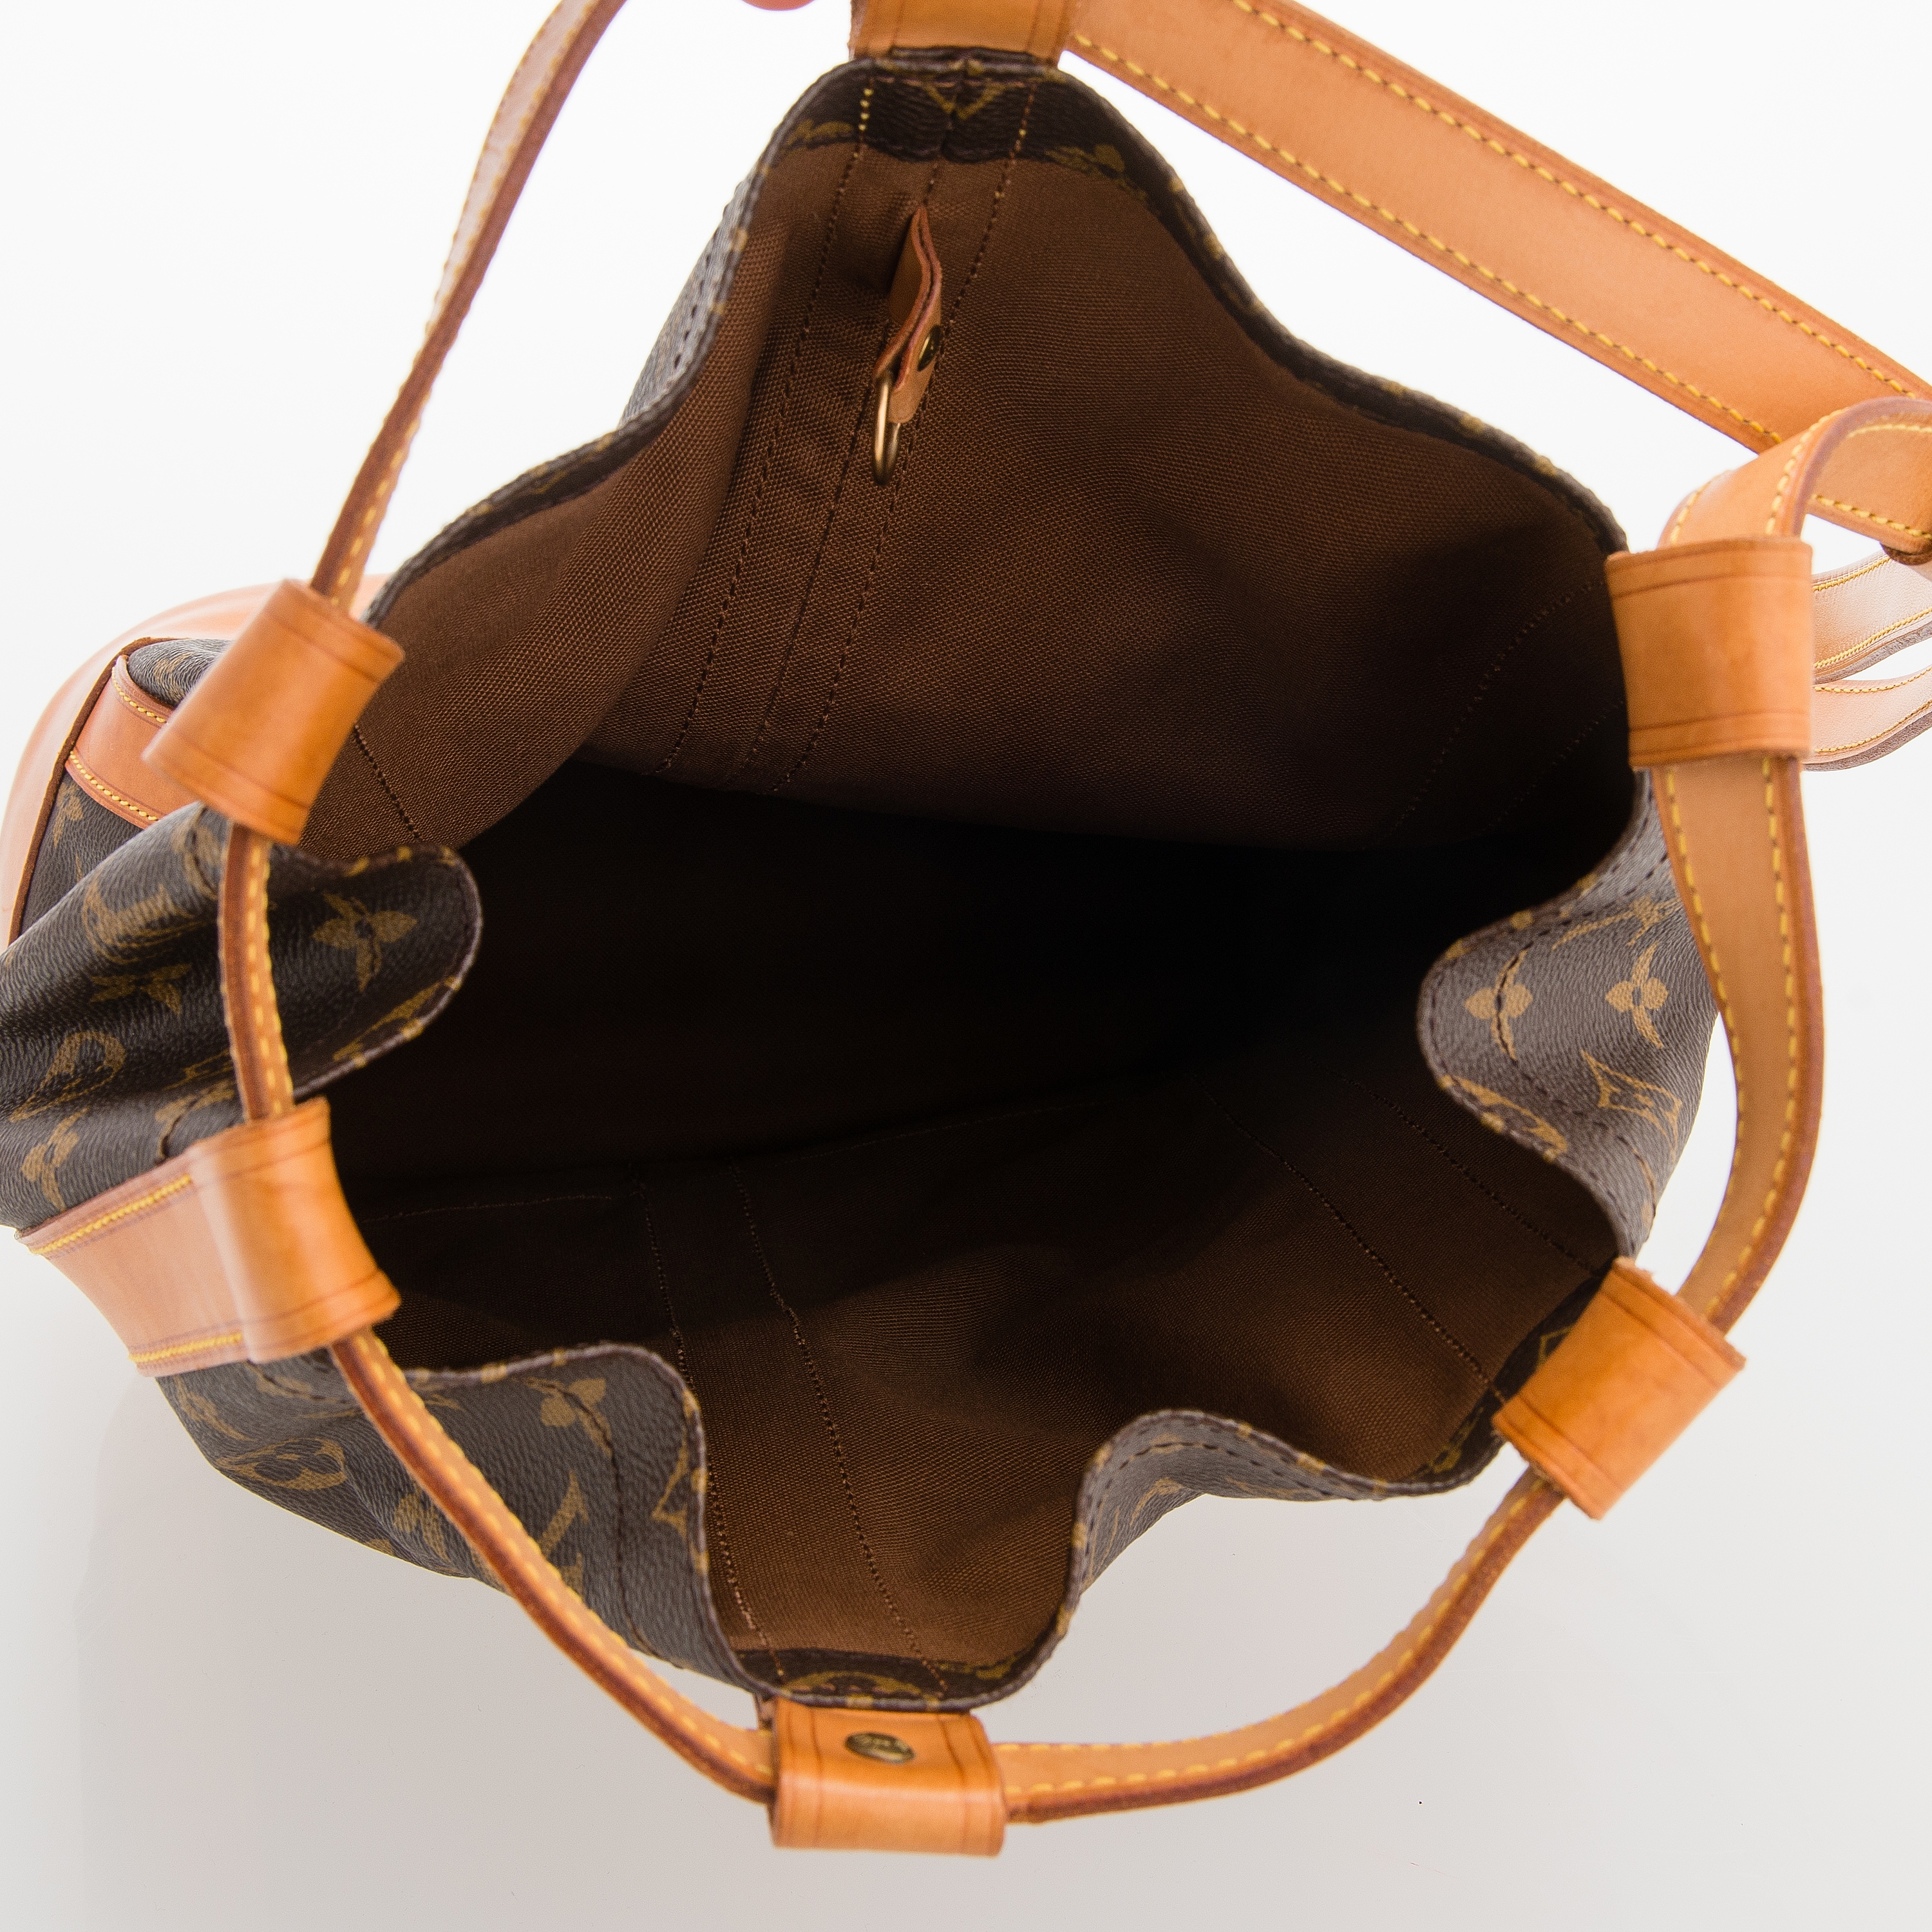 Sold at Auction: Louis Vuitton Red Petit Epi Noe Bucket Bag 1989